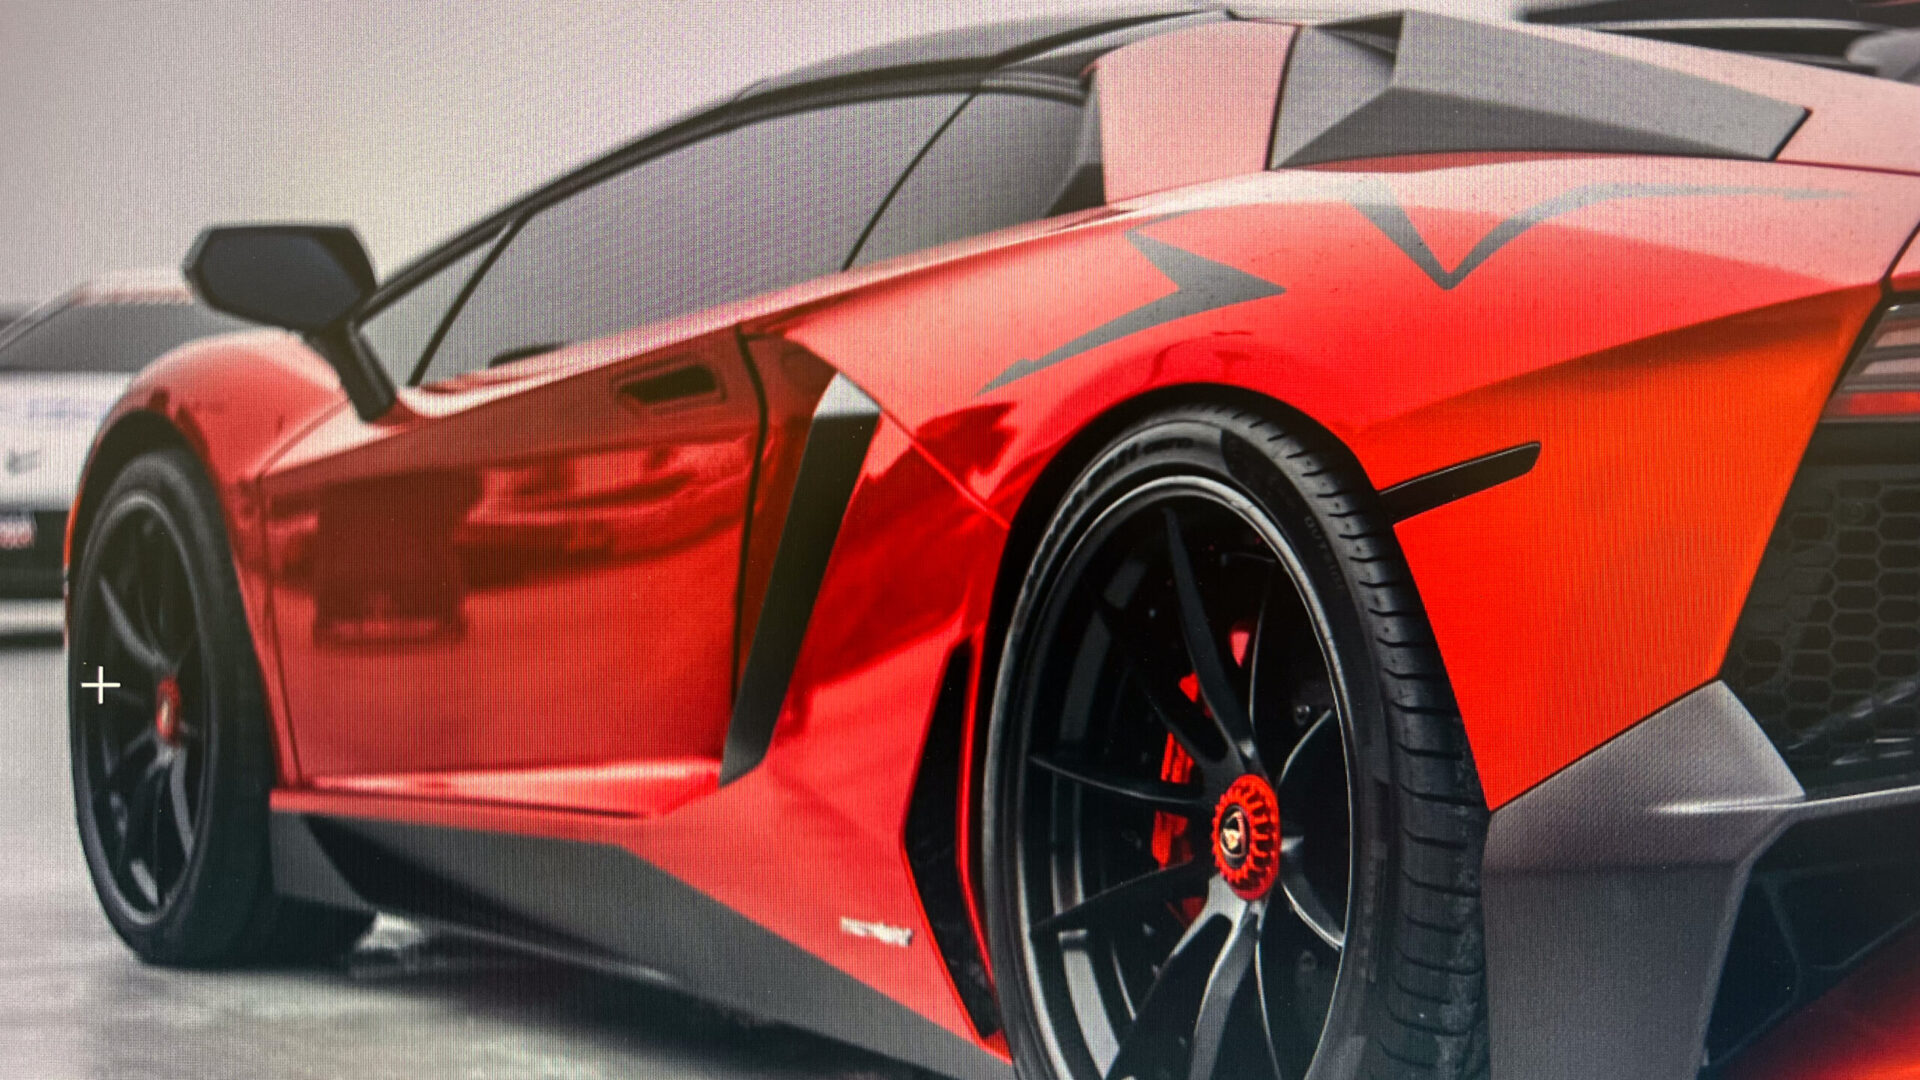 Lamborghini SVJ with ceramic coating west palm beach fl